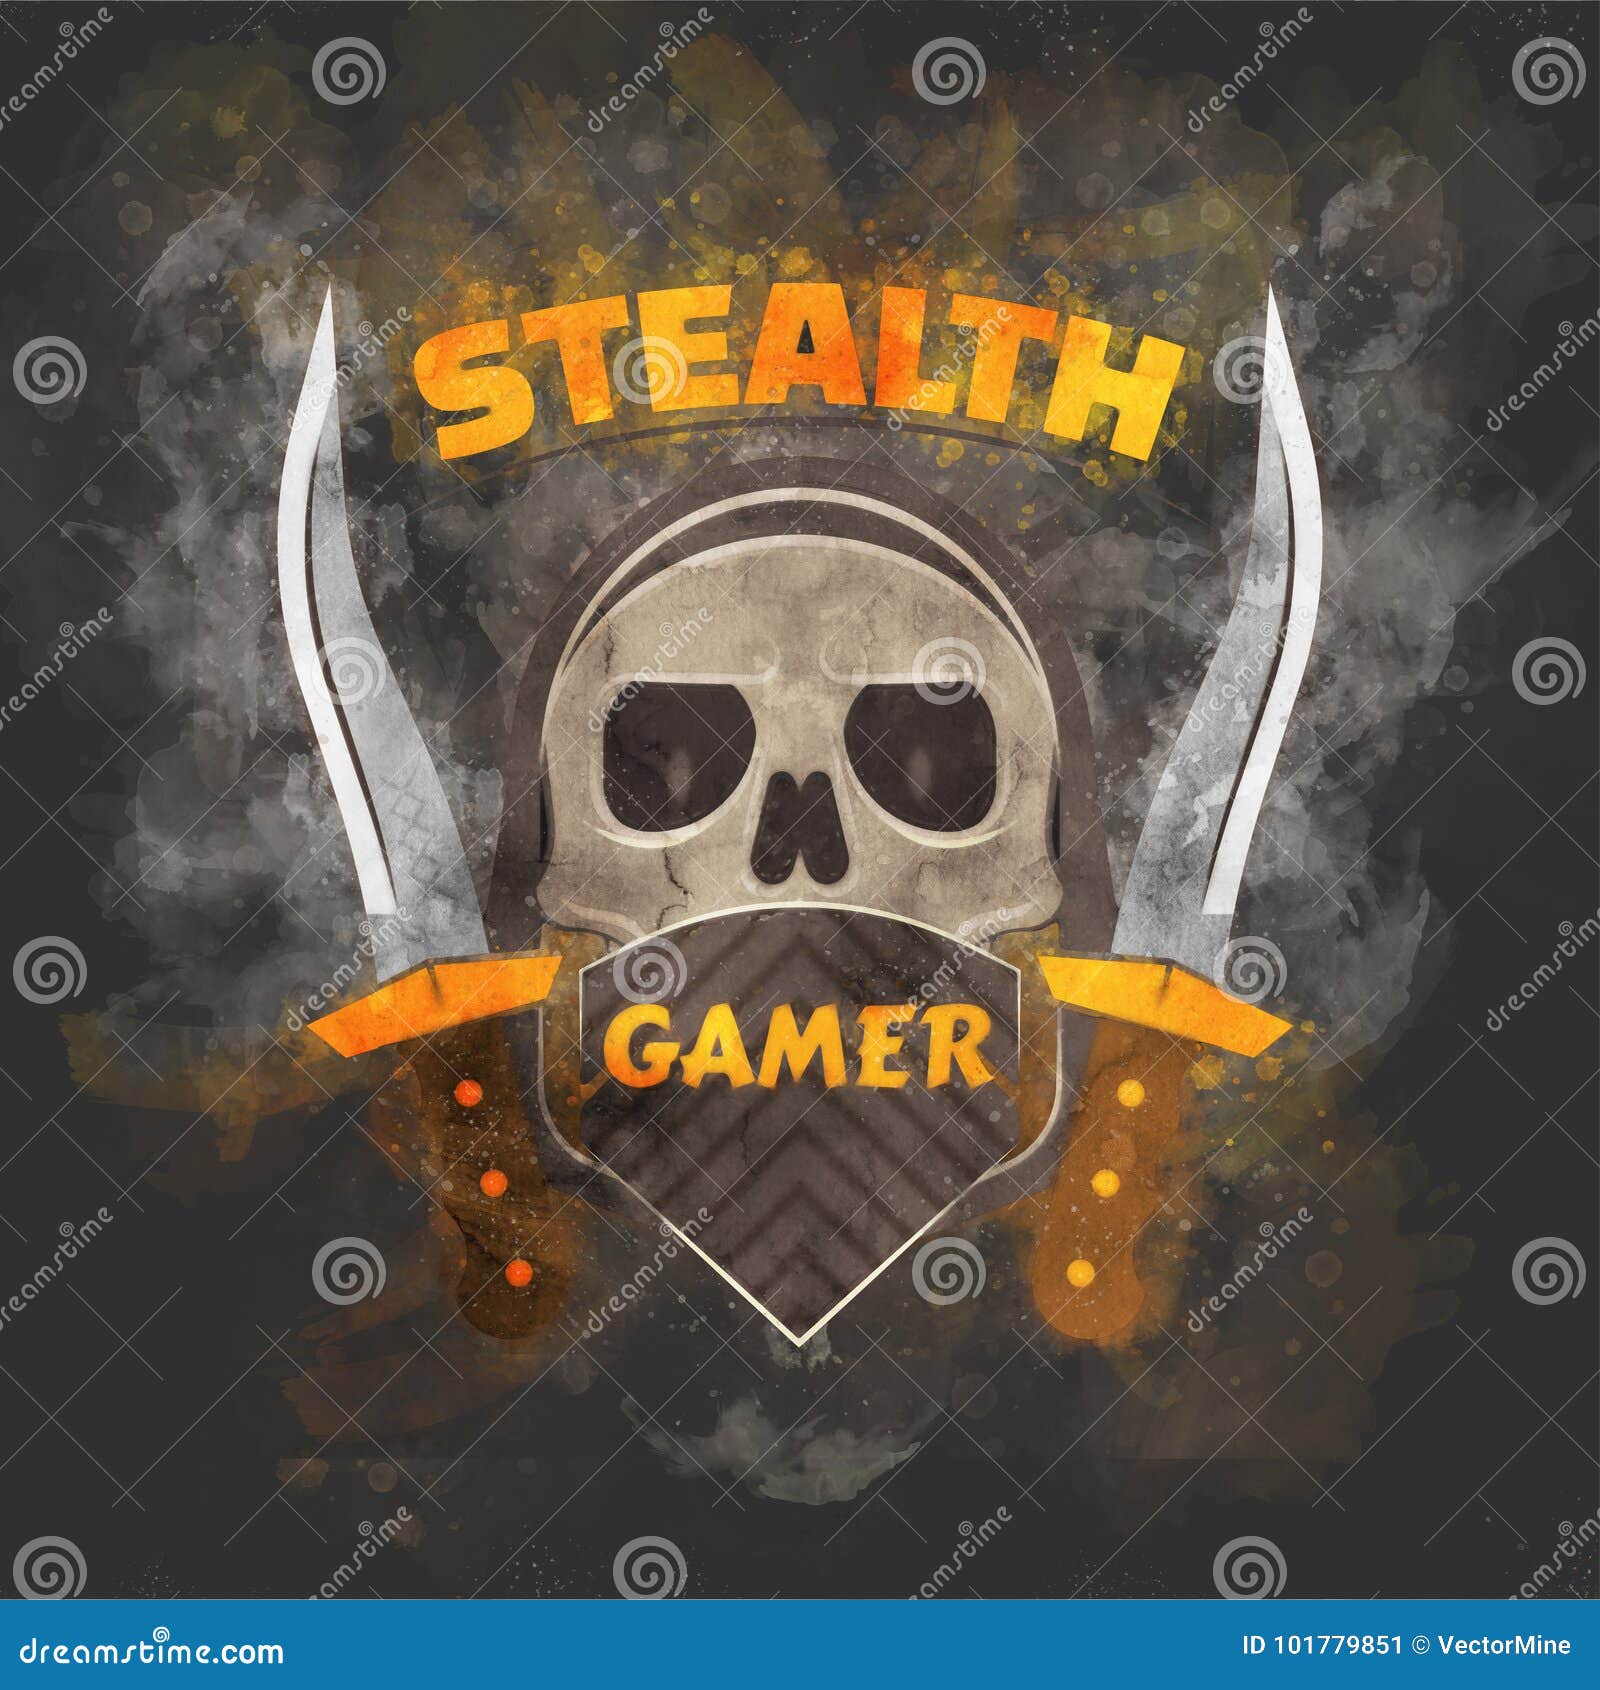 Stealth gamer stock illustration. Illustration of logotype - 101779851